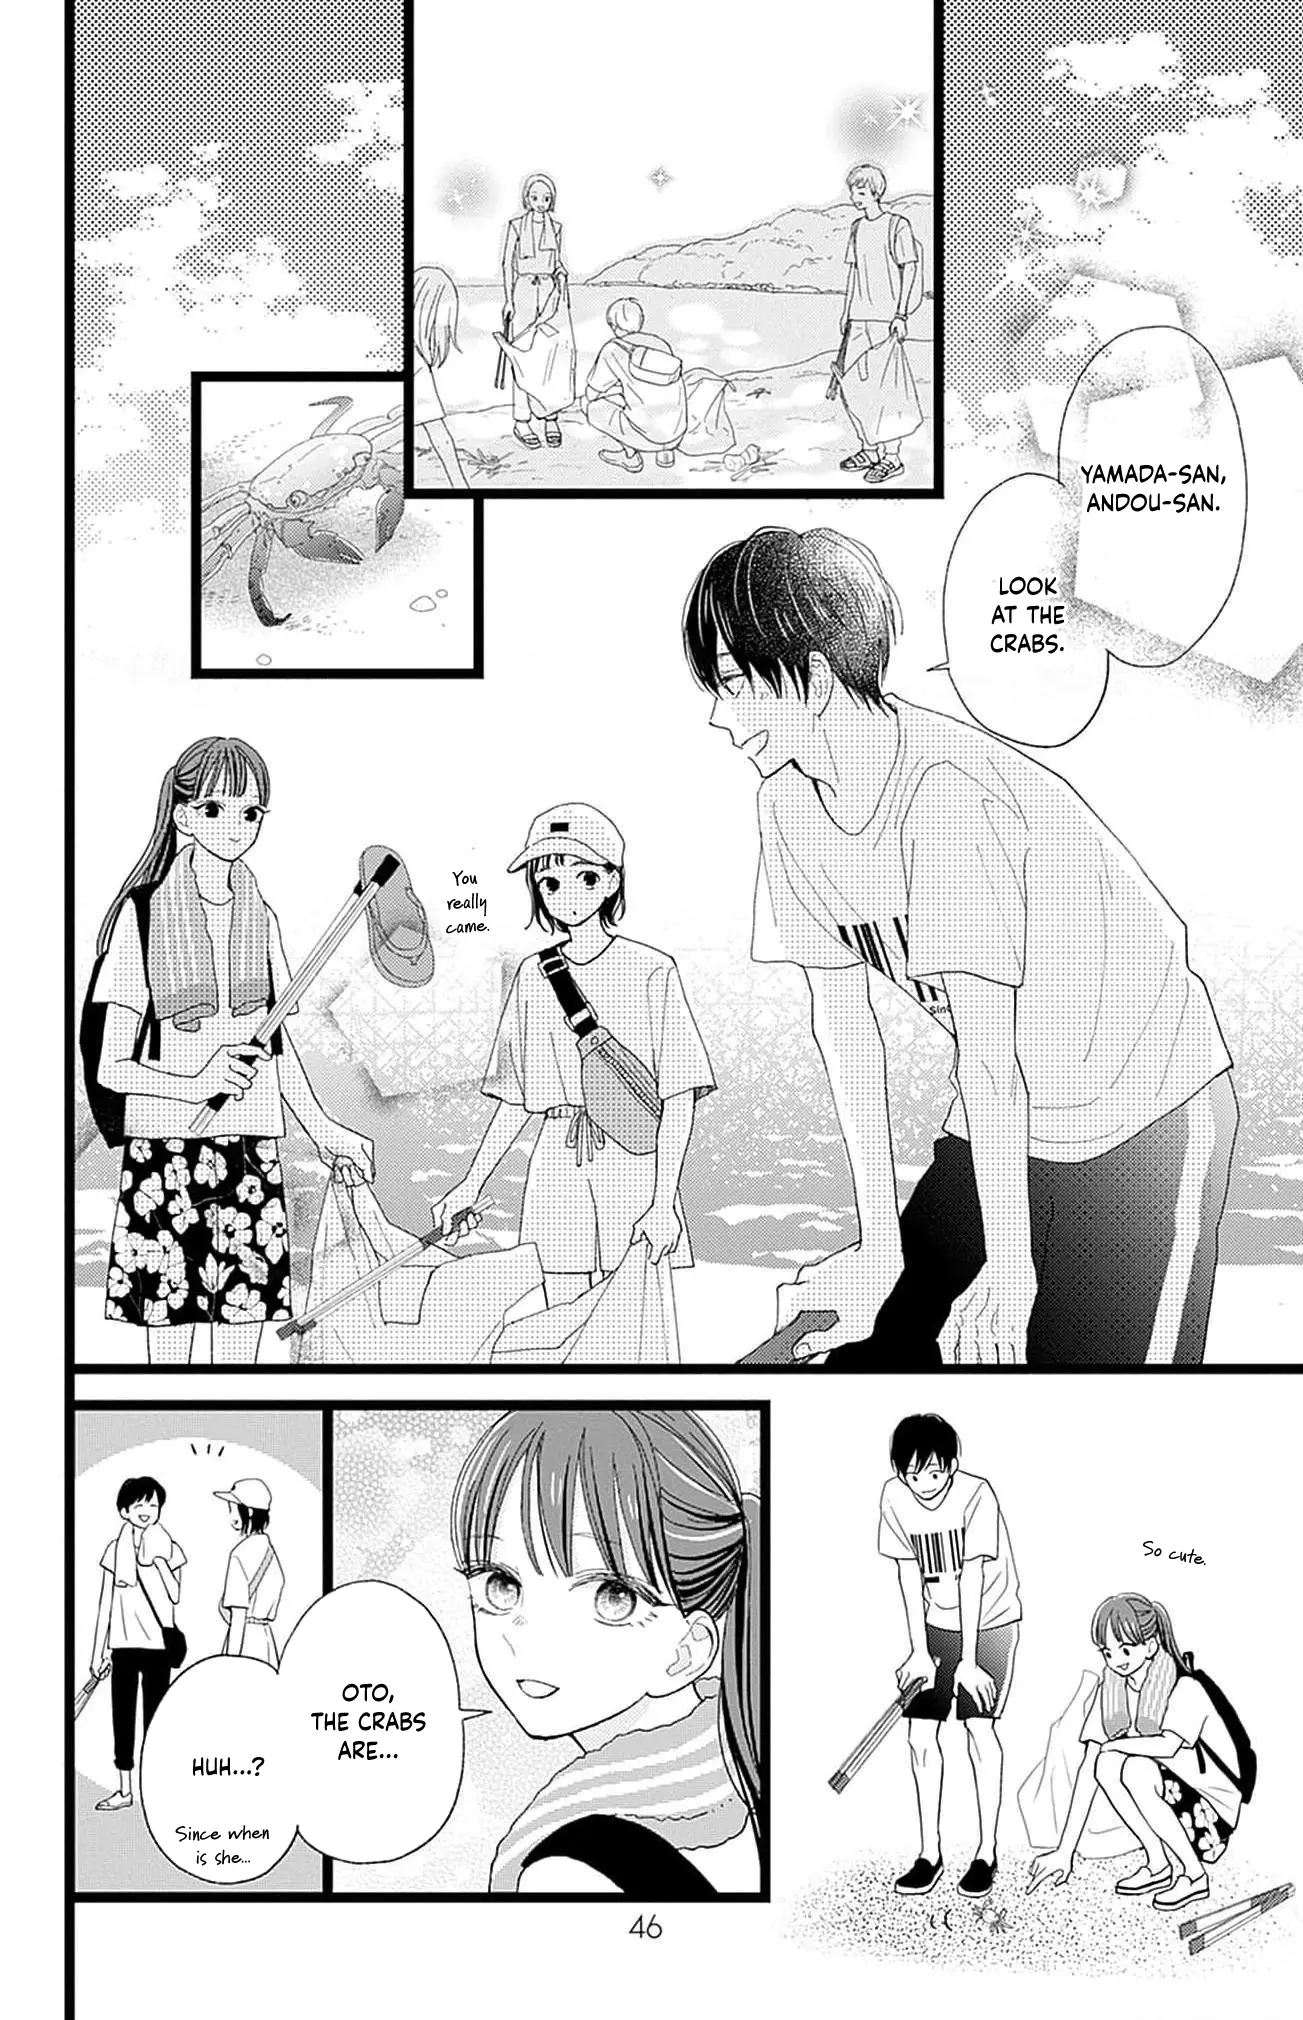 Yamada-Ke No Onna - 1 page 47-27c05560